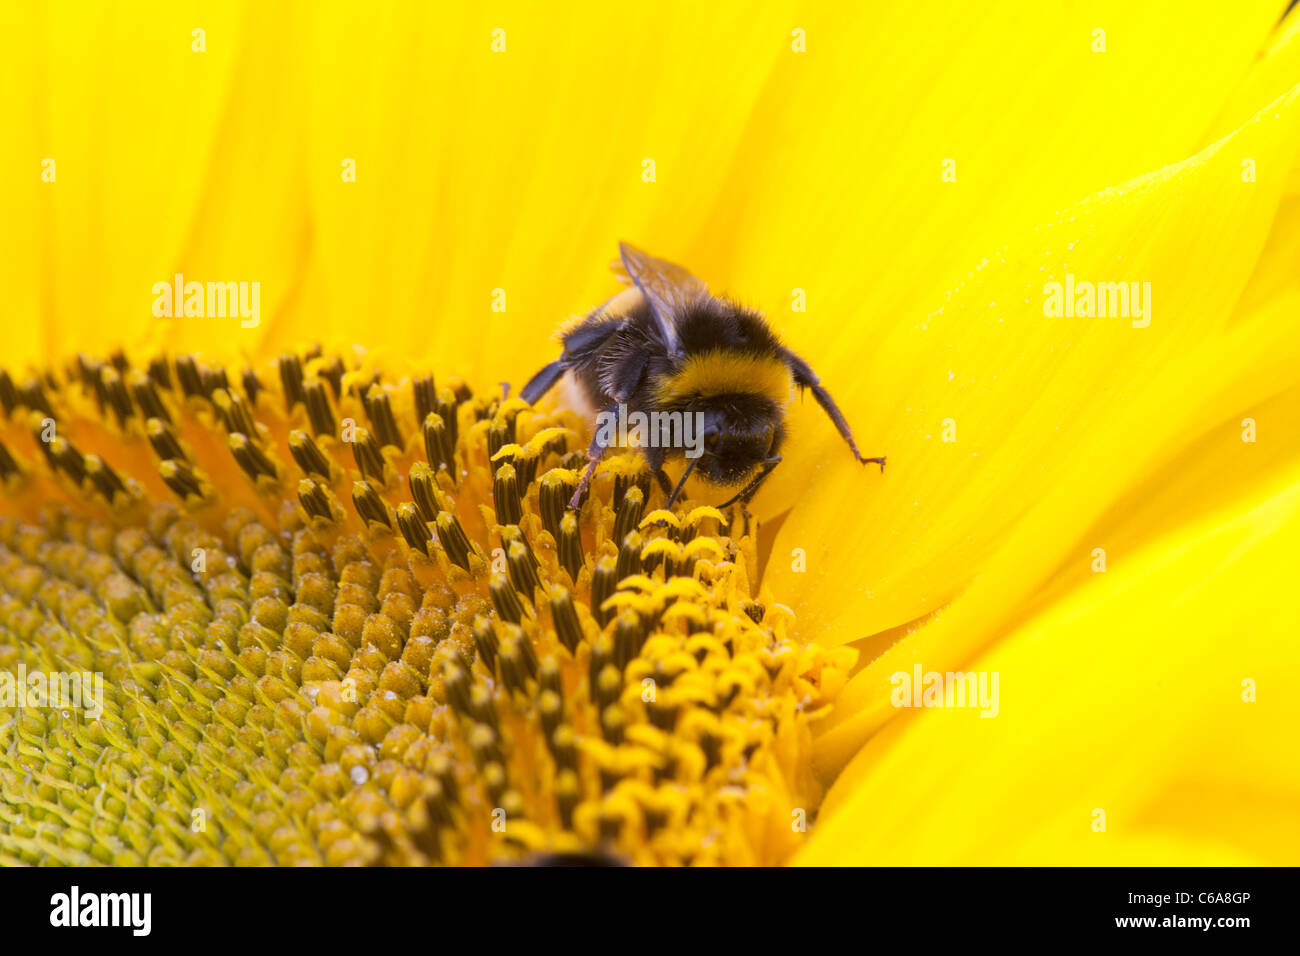 Bombus terrestris - bumble bee on sunflower Stock Photo